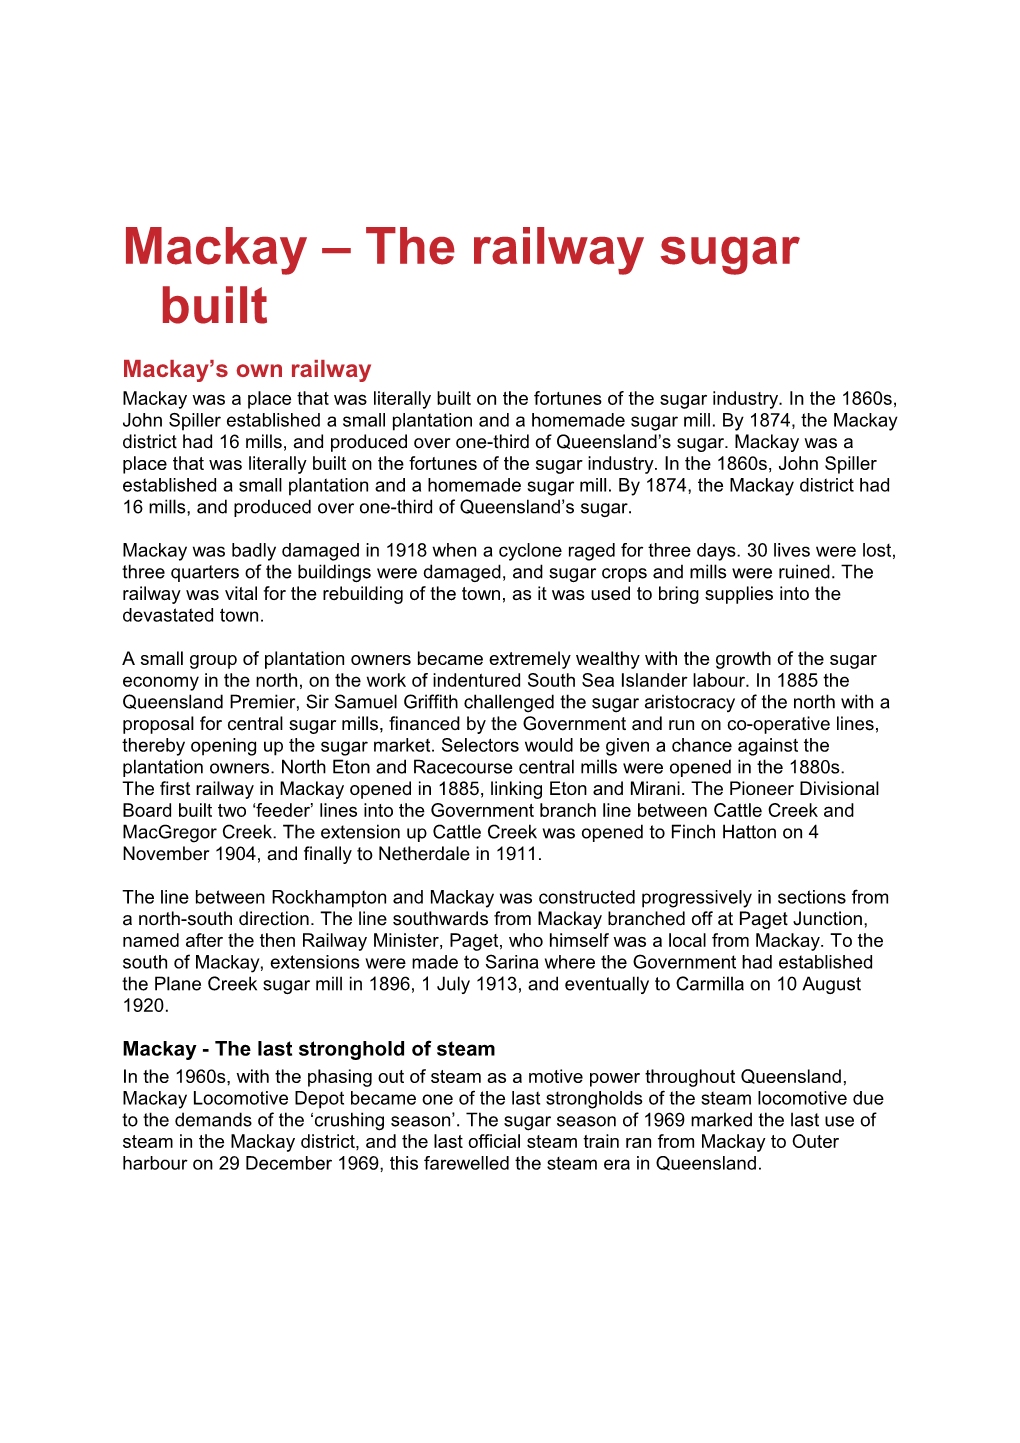 Mackay the Railway Sugar Built